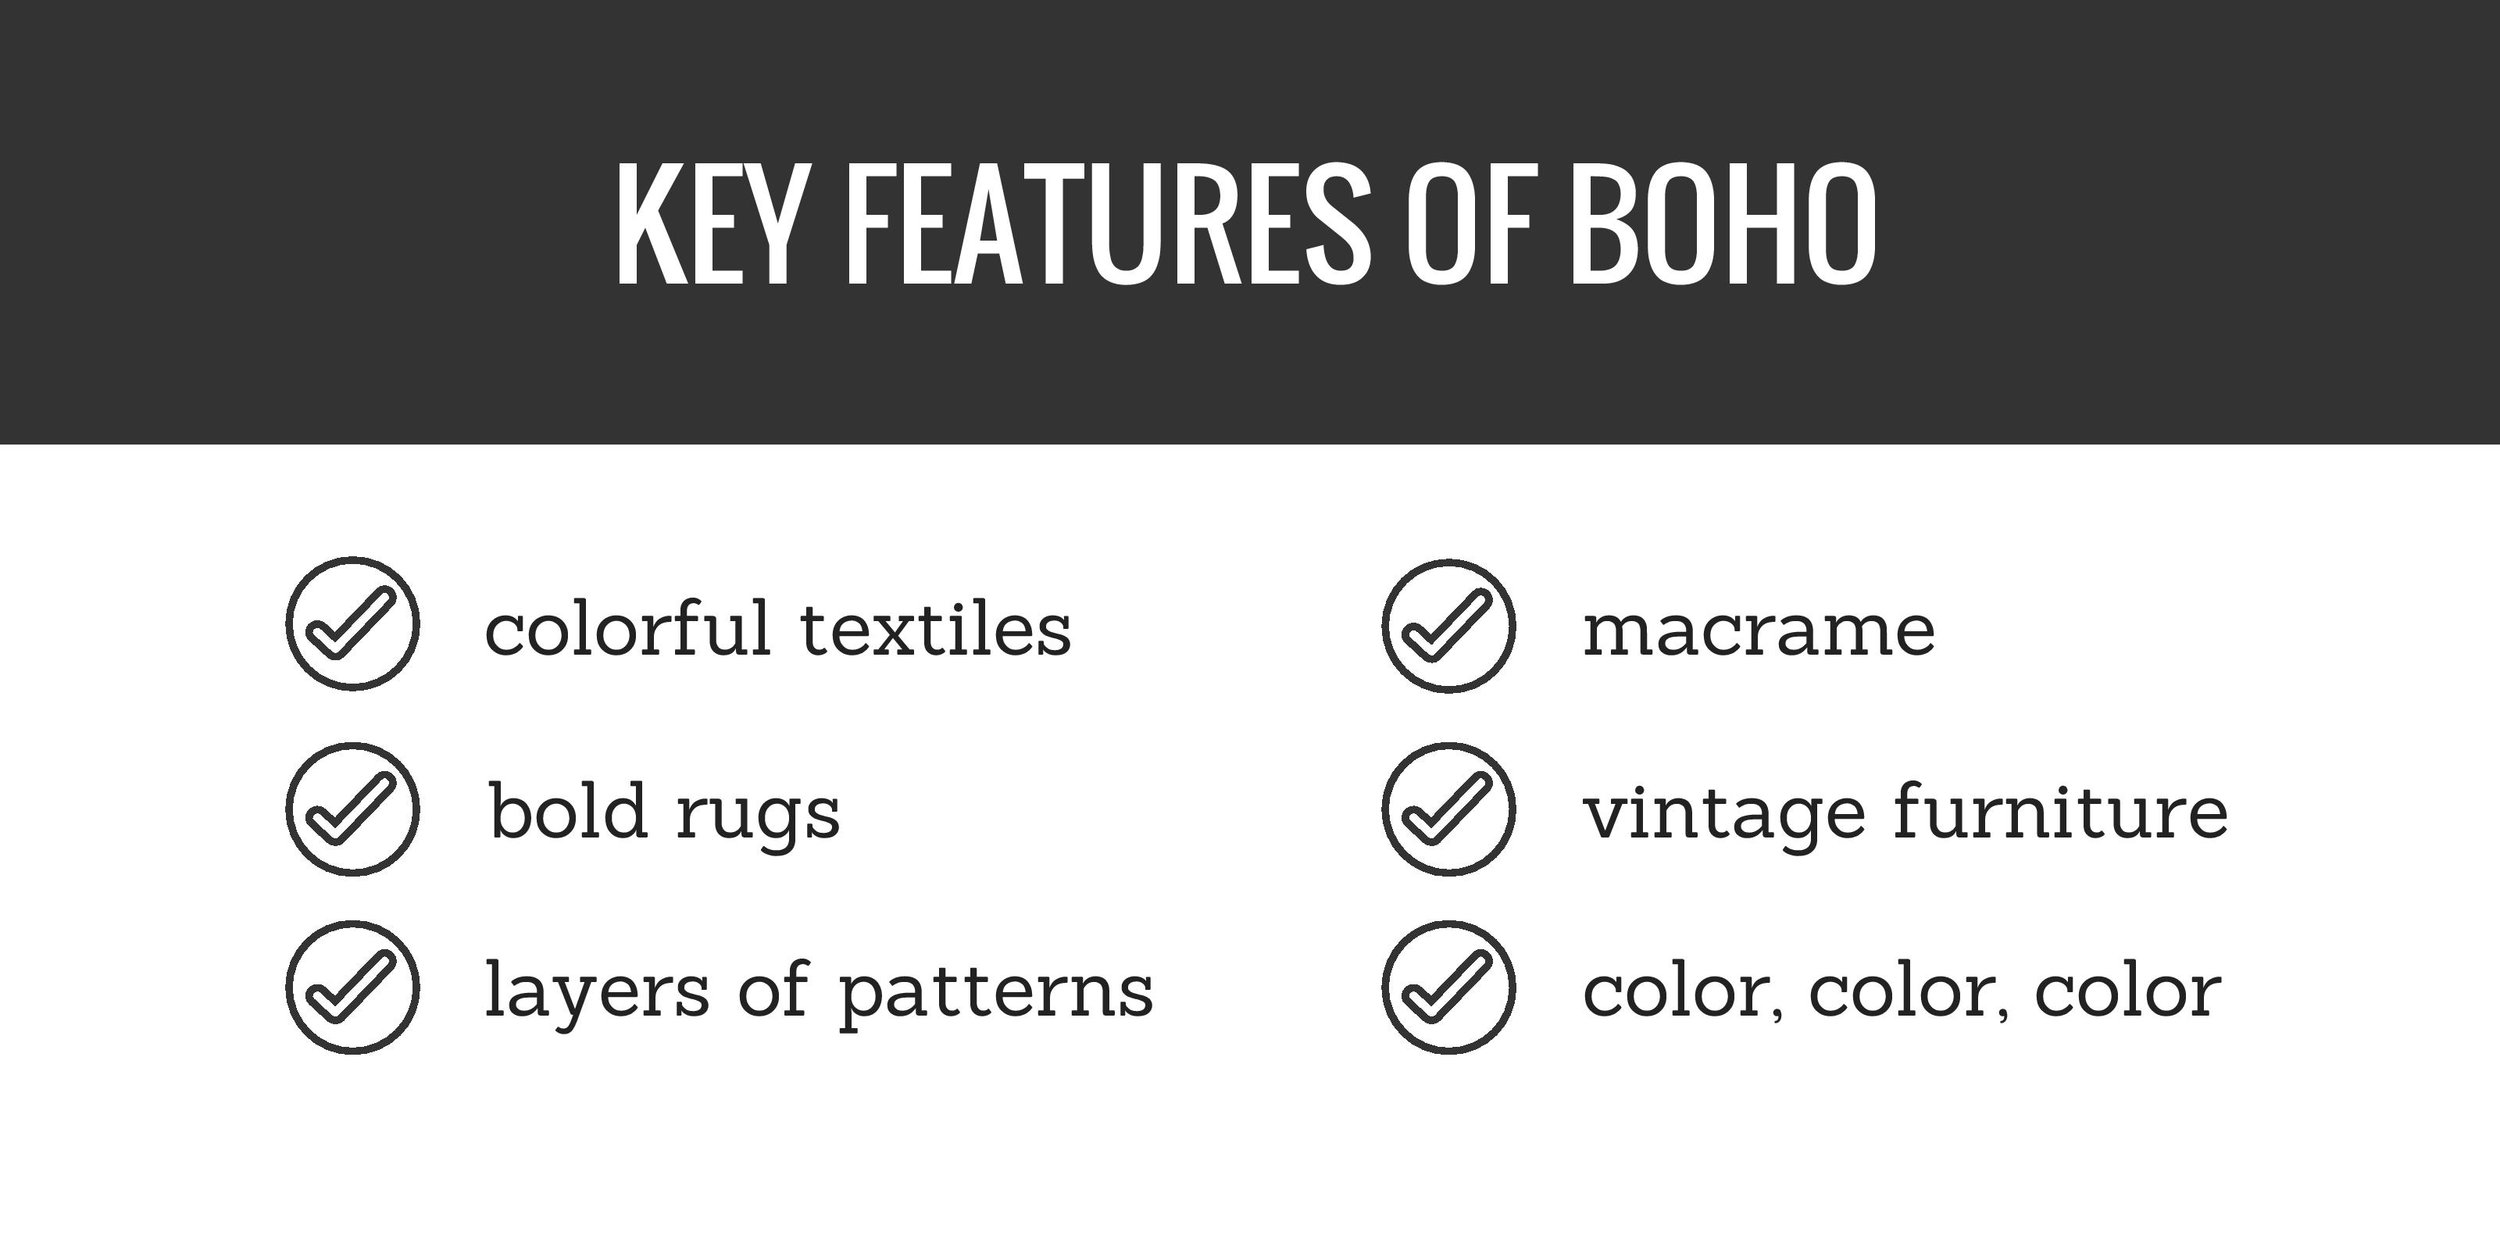 key features of boho (bohemian)